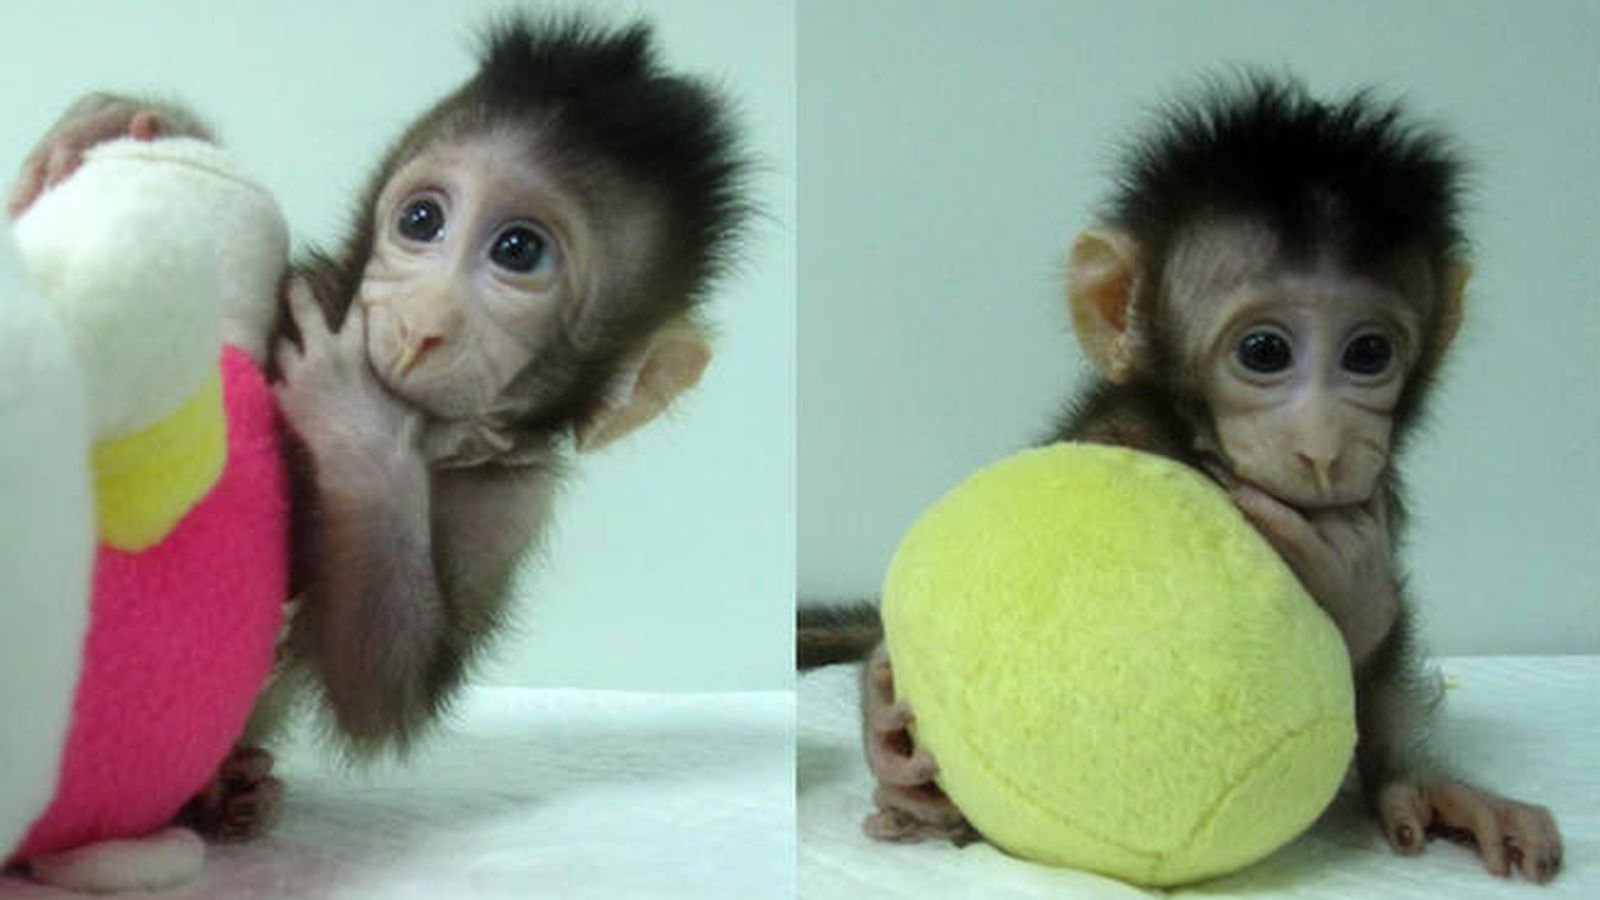 Foto: Zhong Zhong y Hua Hua son los primeros monos clonados mediante transferencia nuclear de células somáticas. / Qiang Sun and Mu-ming Poo / Chinese Academy of Sciences